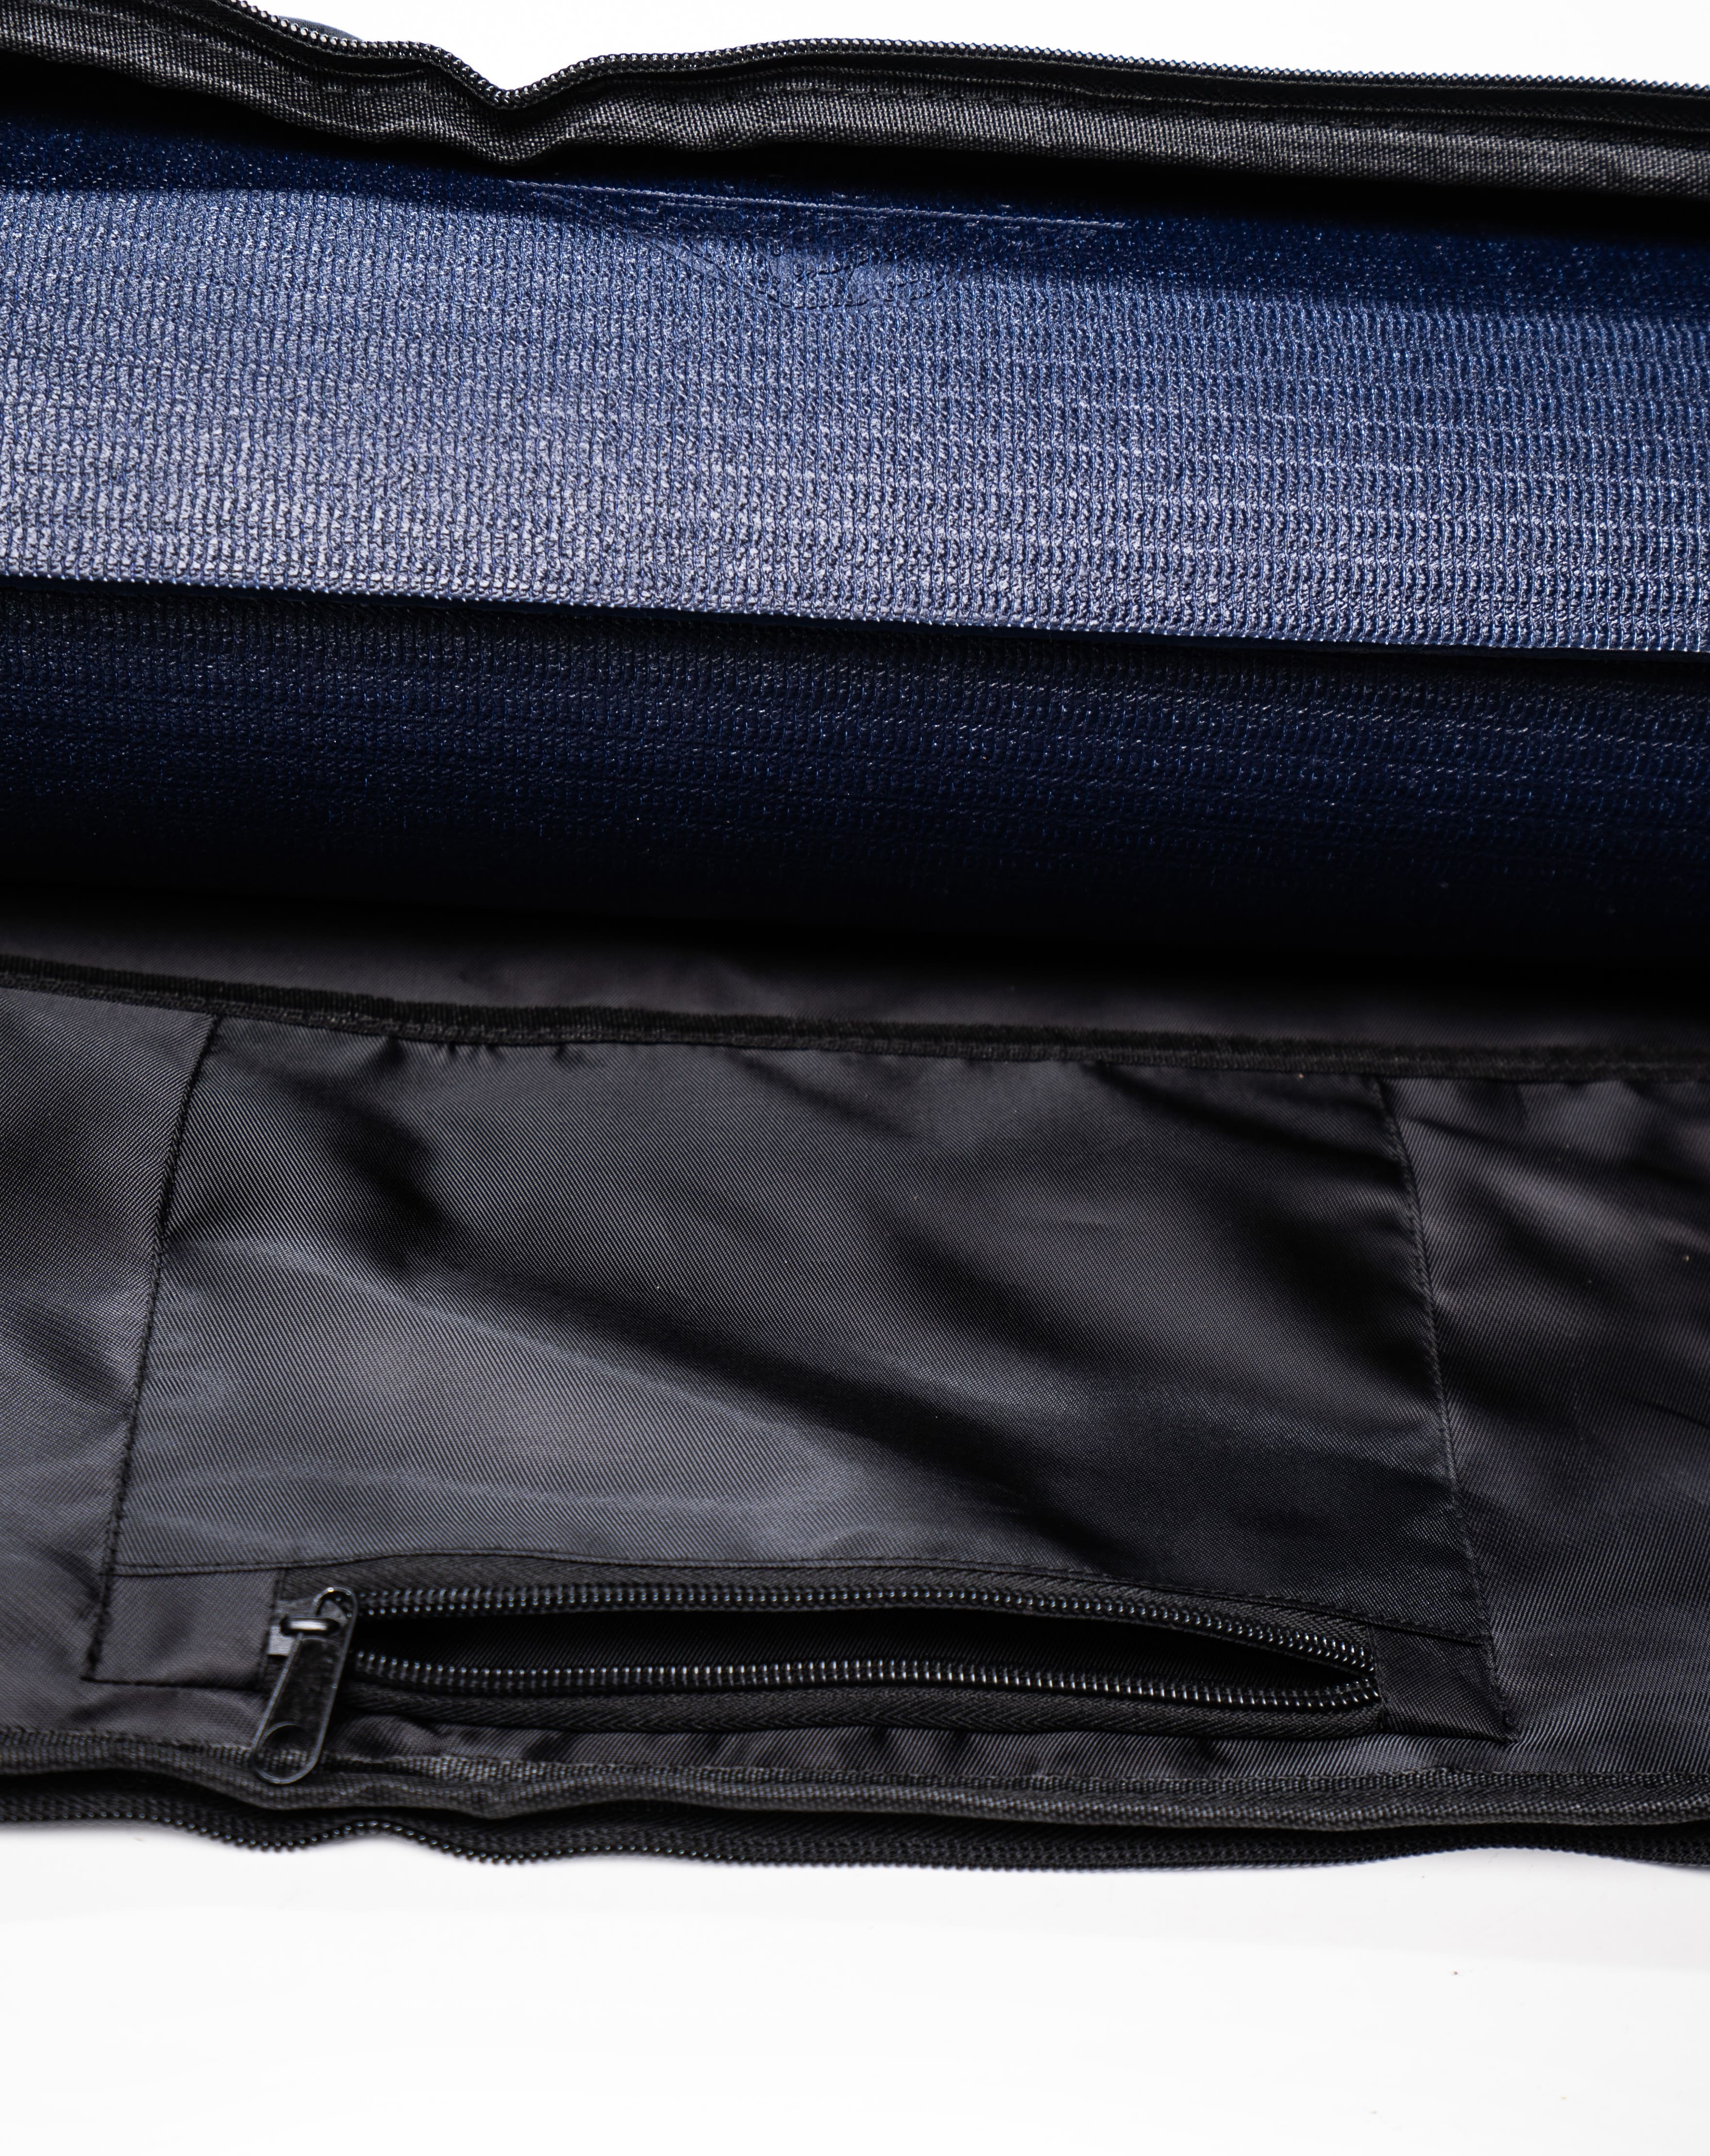 yoga mat carry bag inside zipper pocket